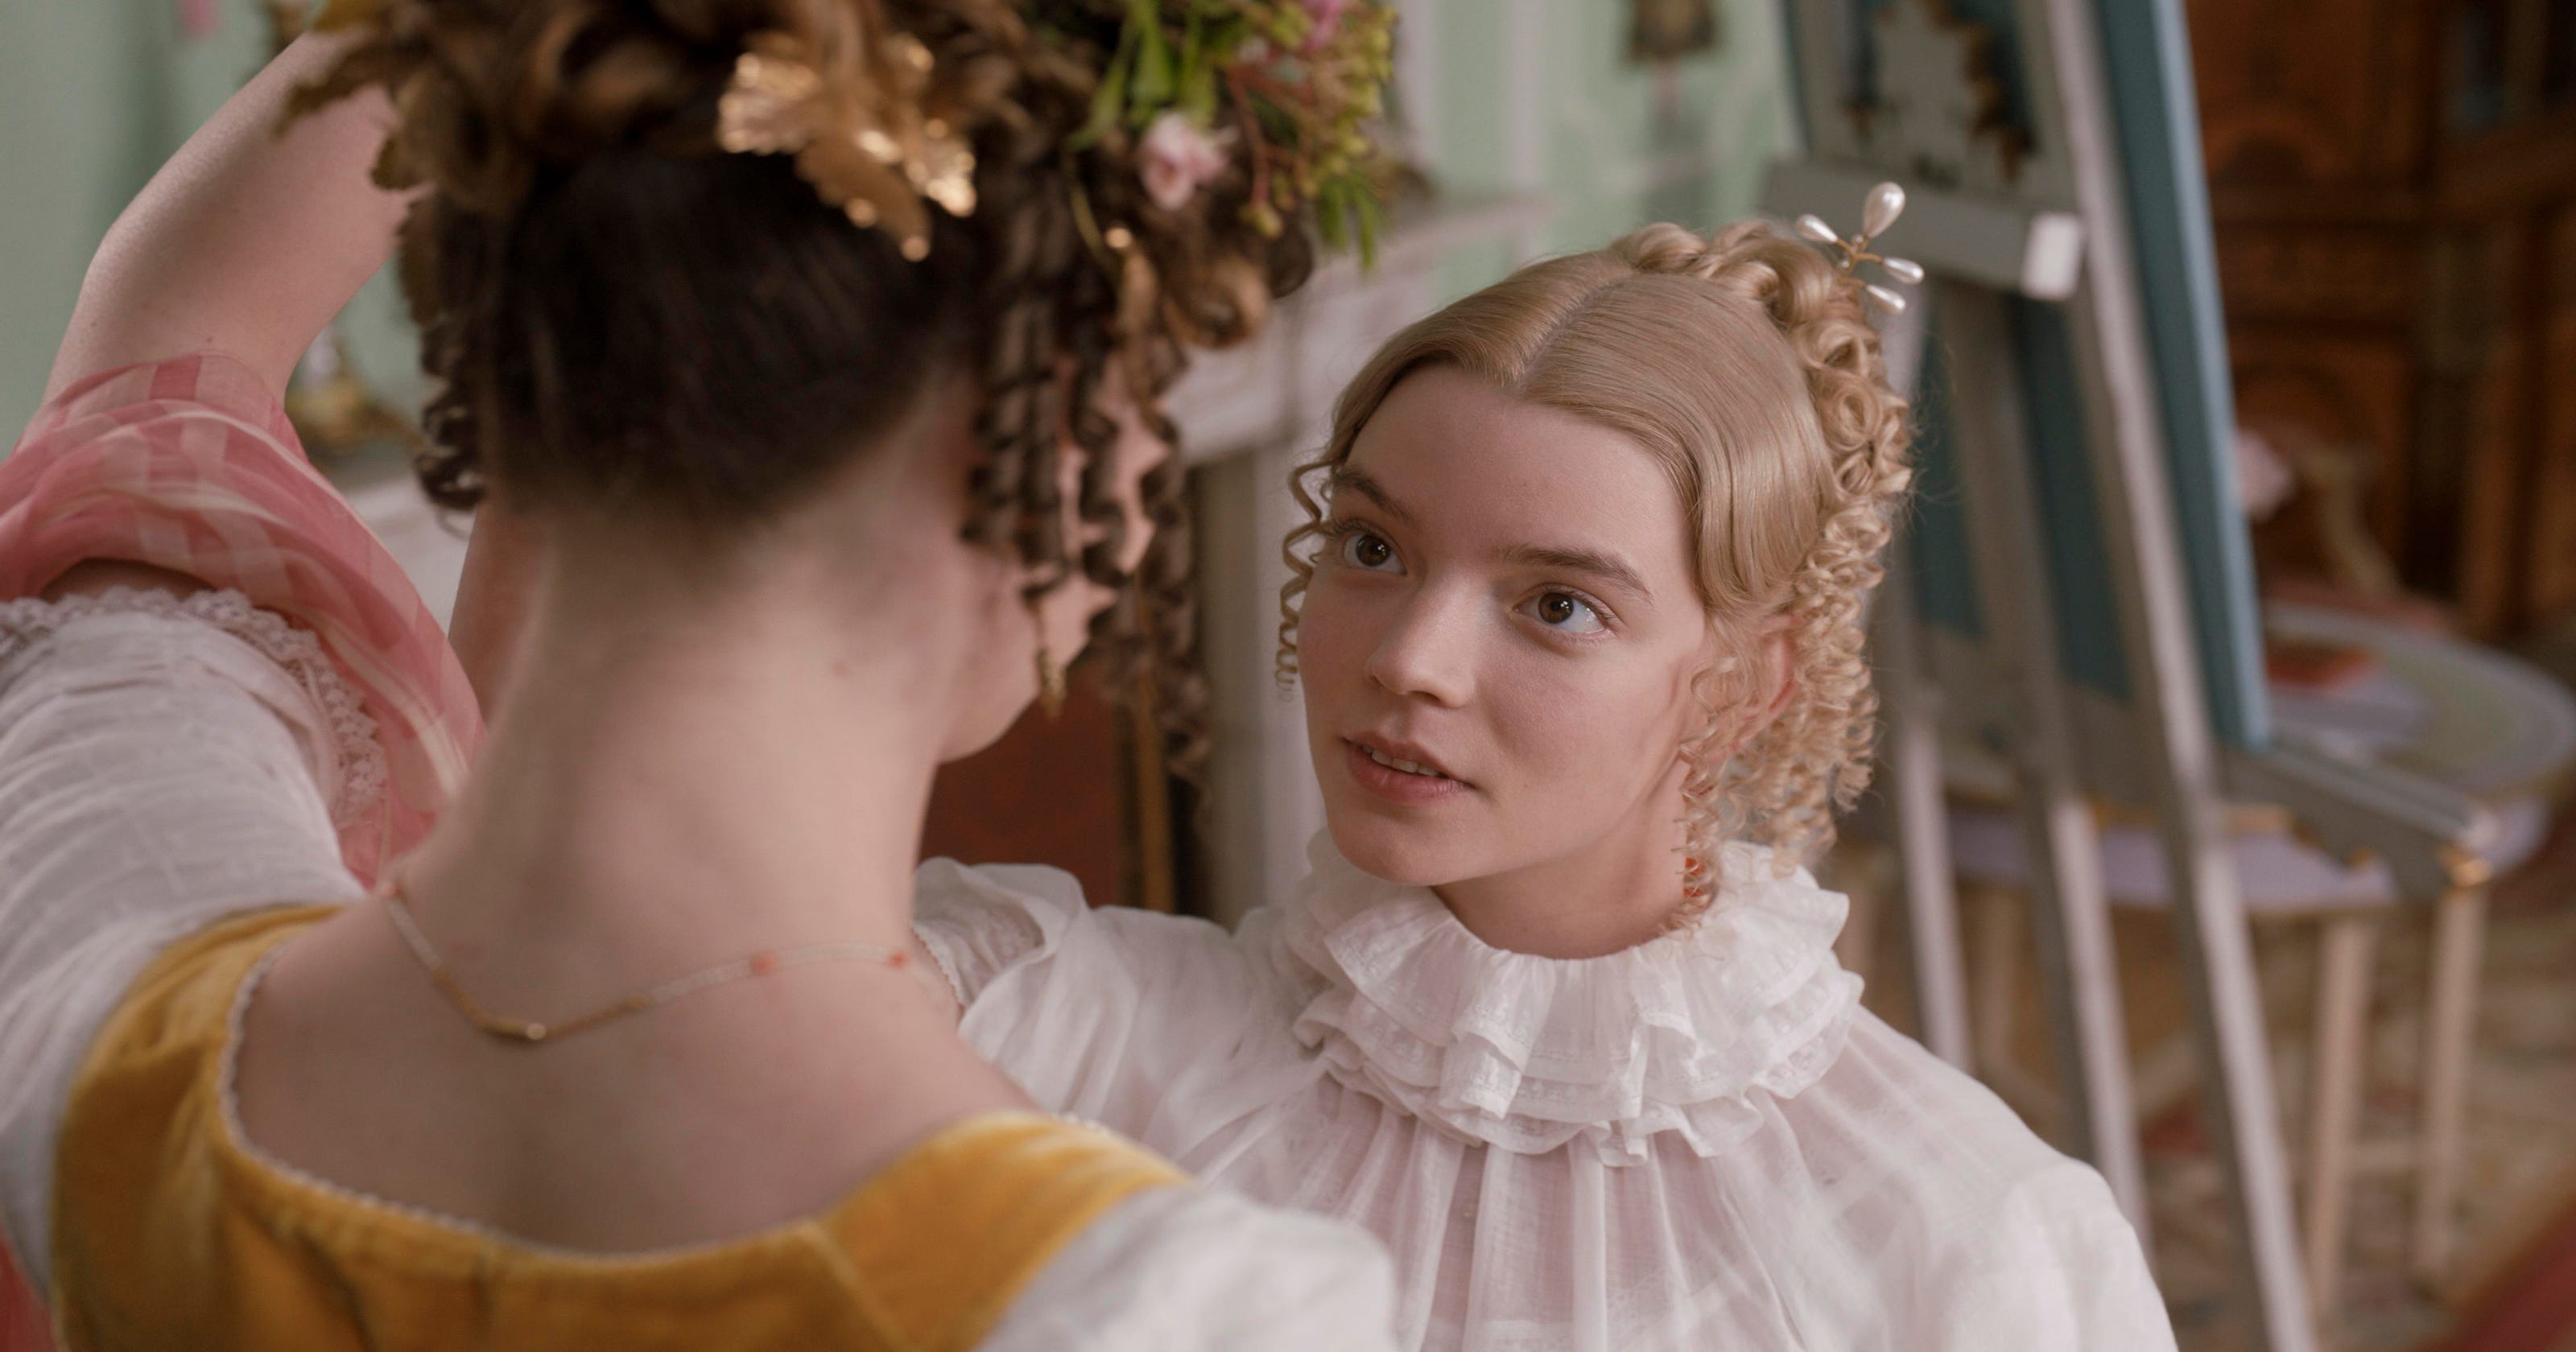 Latest film version of 'Emma' humanizes Jane Austen story